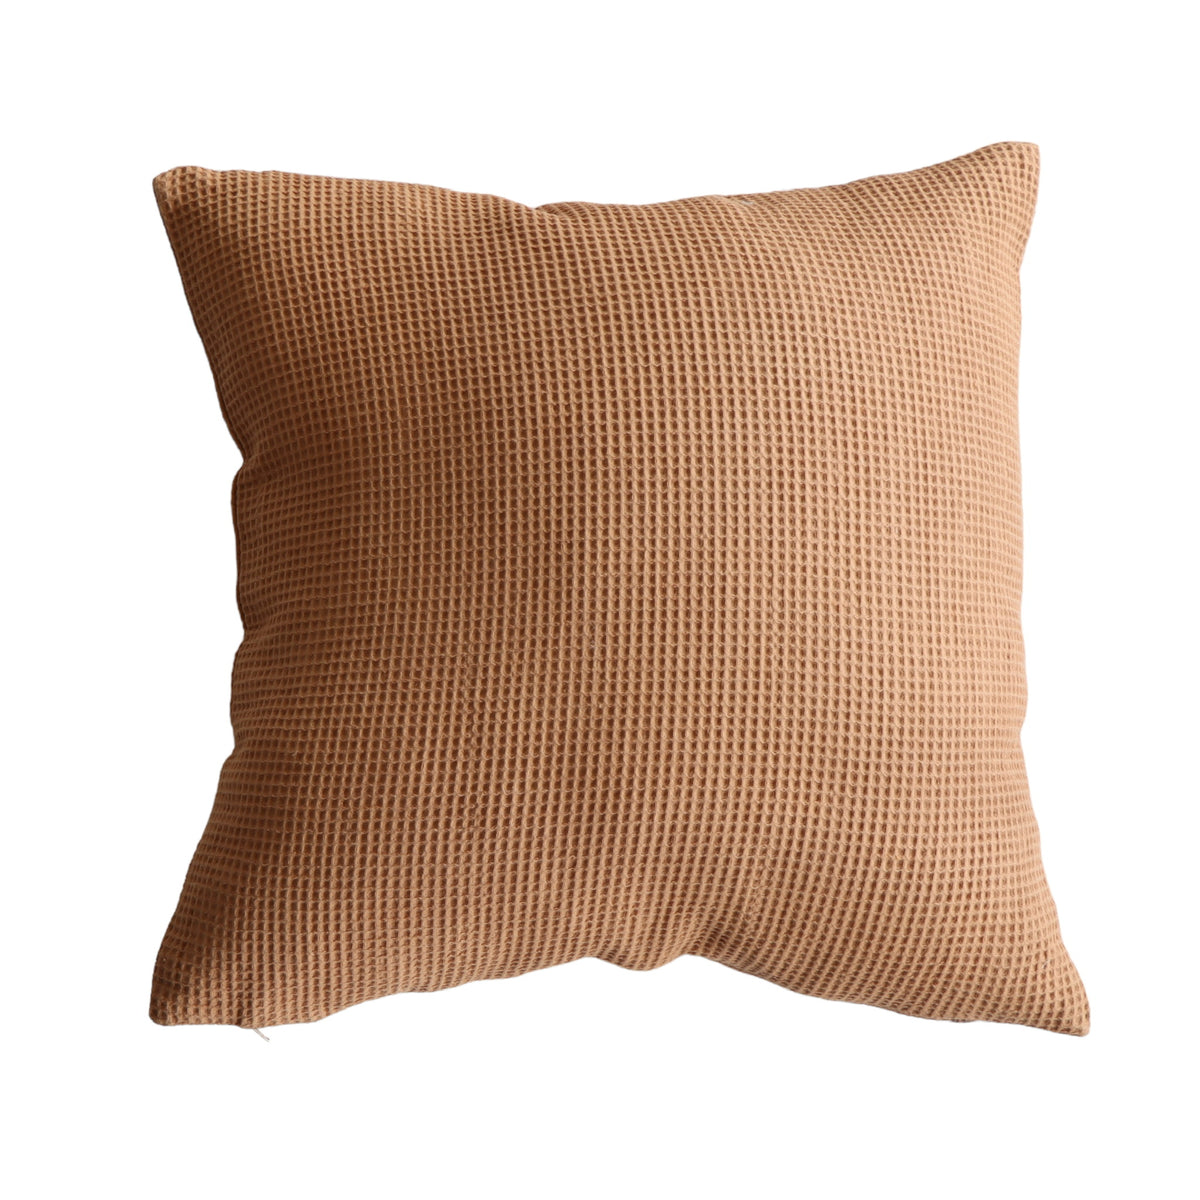 Waffle Cotton and Linen Pillow 20x20 - Rust - Holistic Habitat 